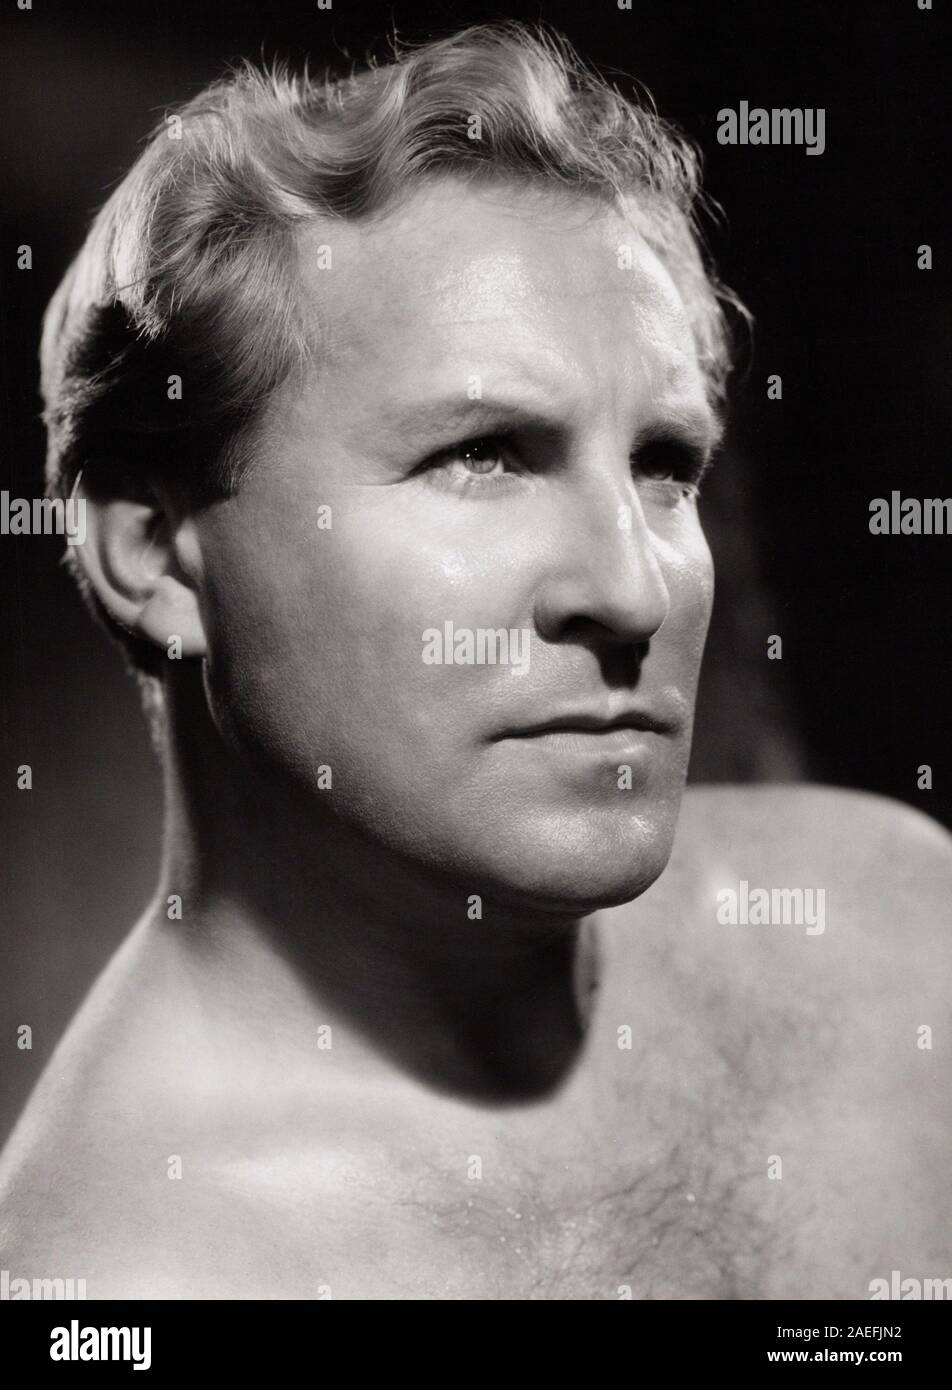 Jon Bratt Otnes, norwegischer Opernsänger, Deutschland um 1956. Norwegian opera singer Jon Bratt Otnes, Germany around 1956. Stock Photo